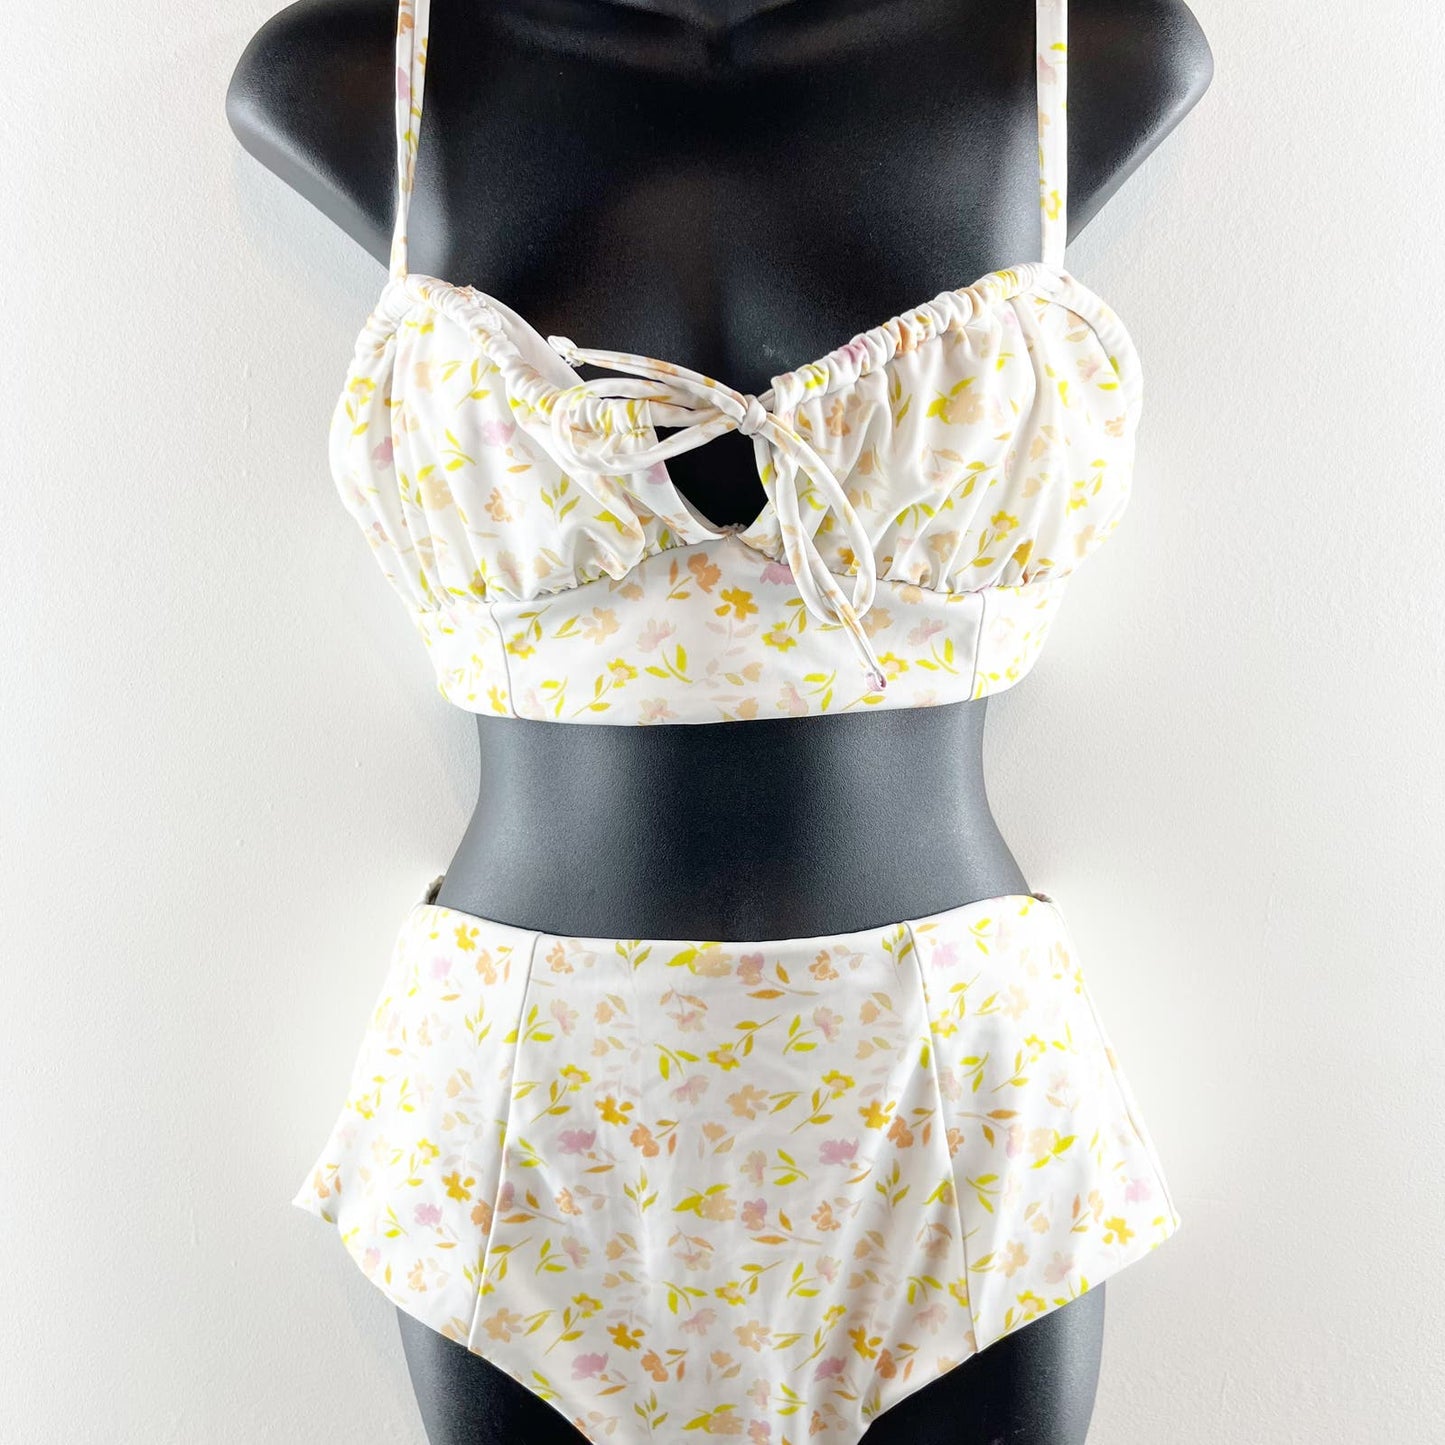 ASOS Fuller Bust Corset Bikini Ditsy Floral White Yellow Top 6 / Bottom 8